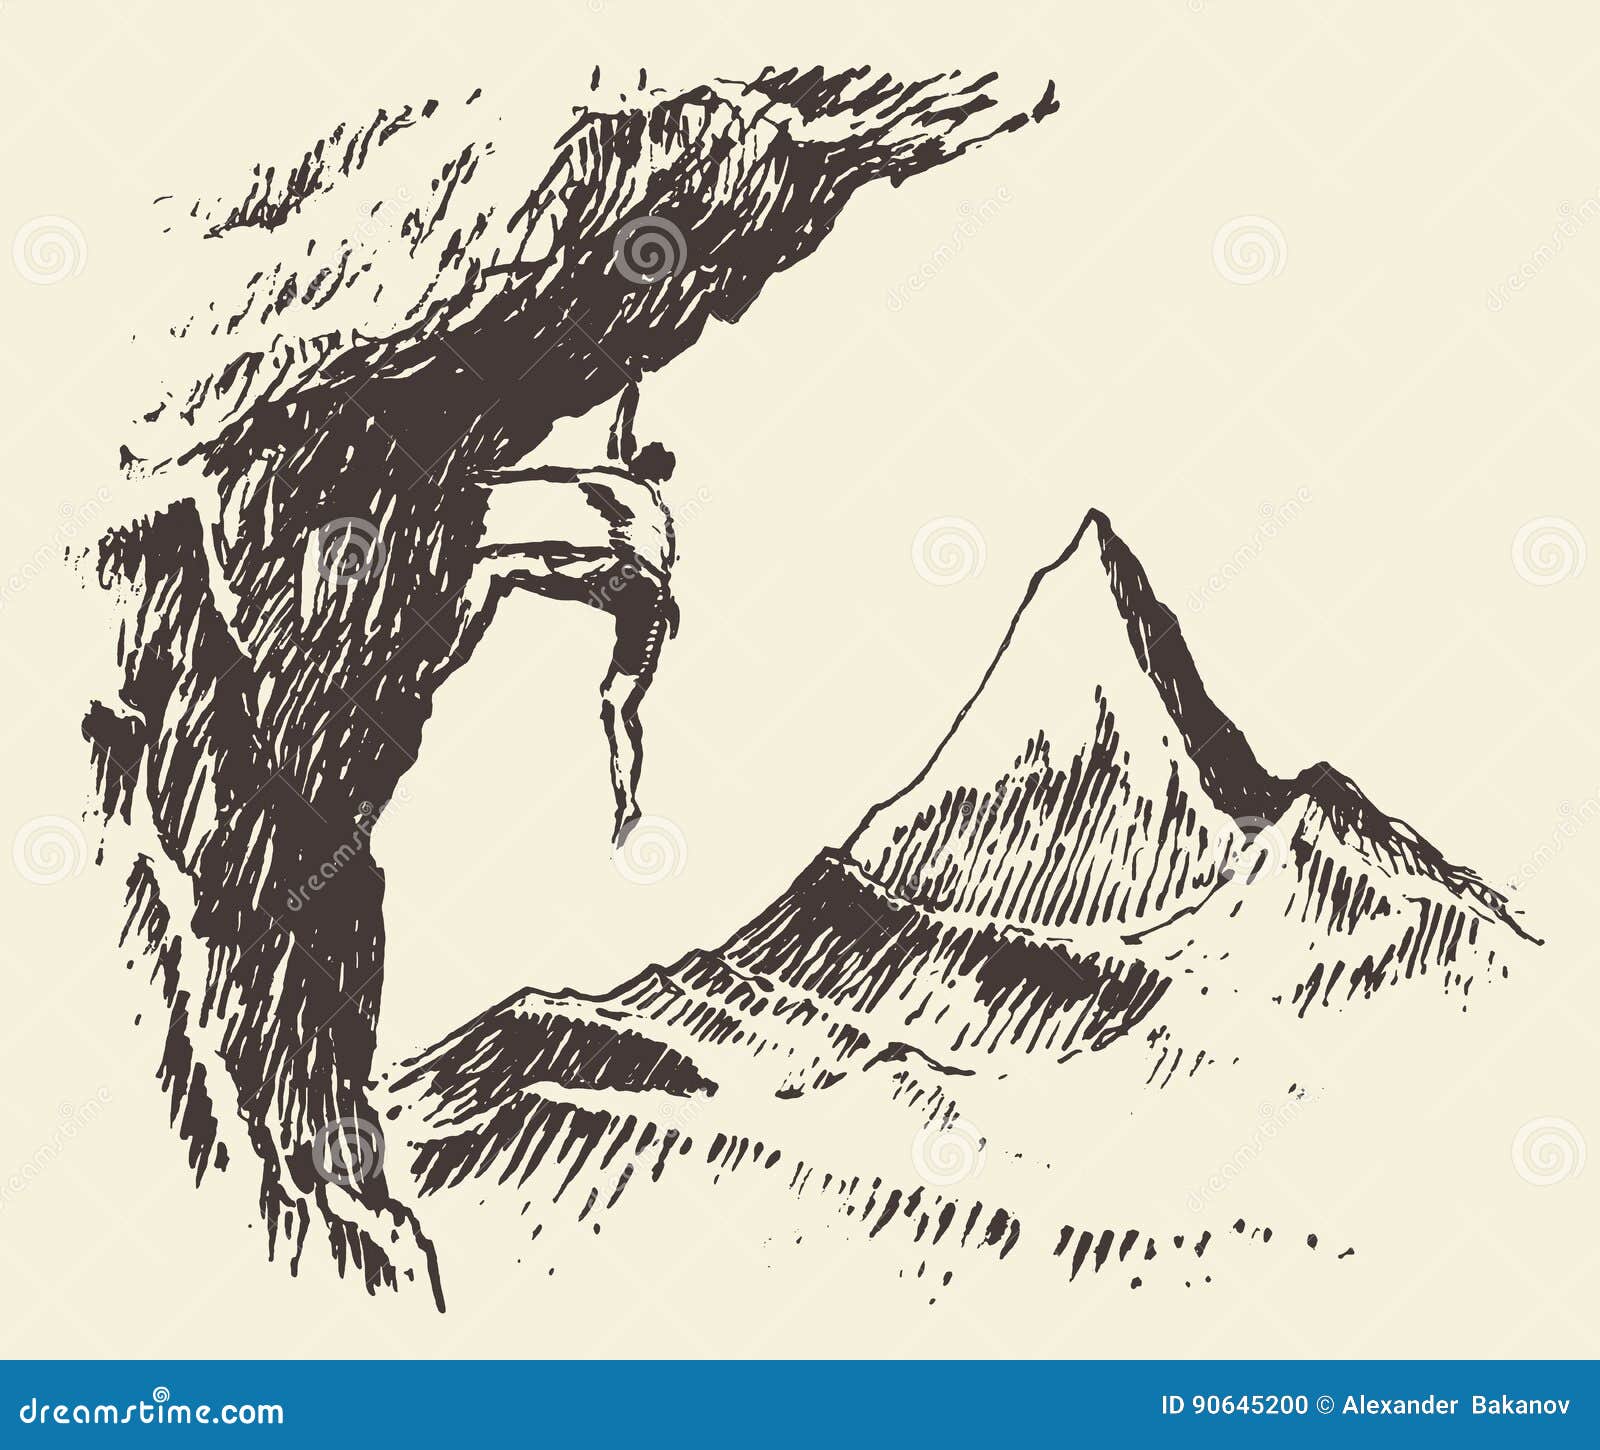 alpinist mountain peak drawn  sketch